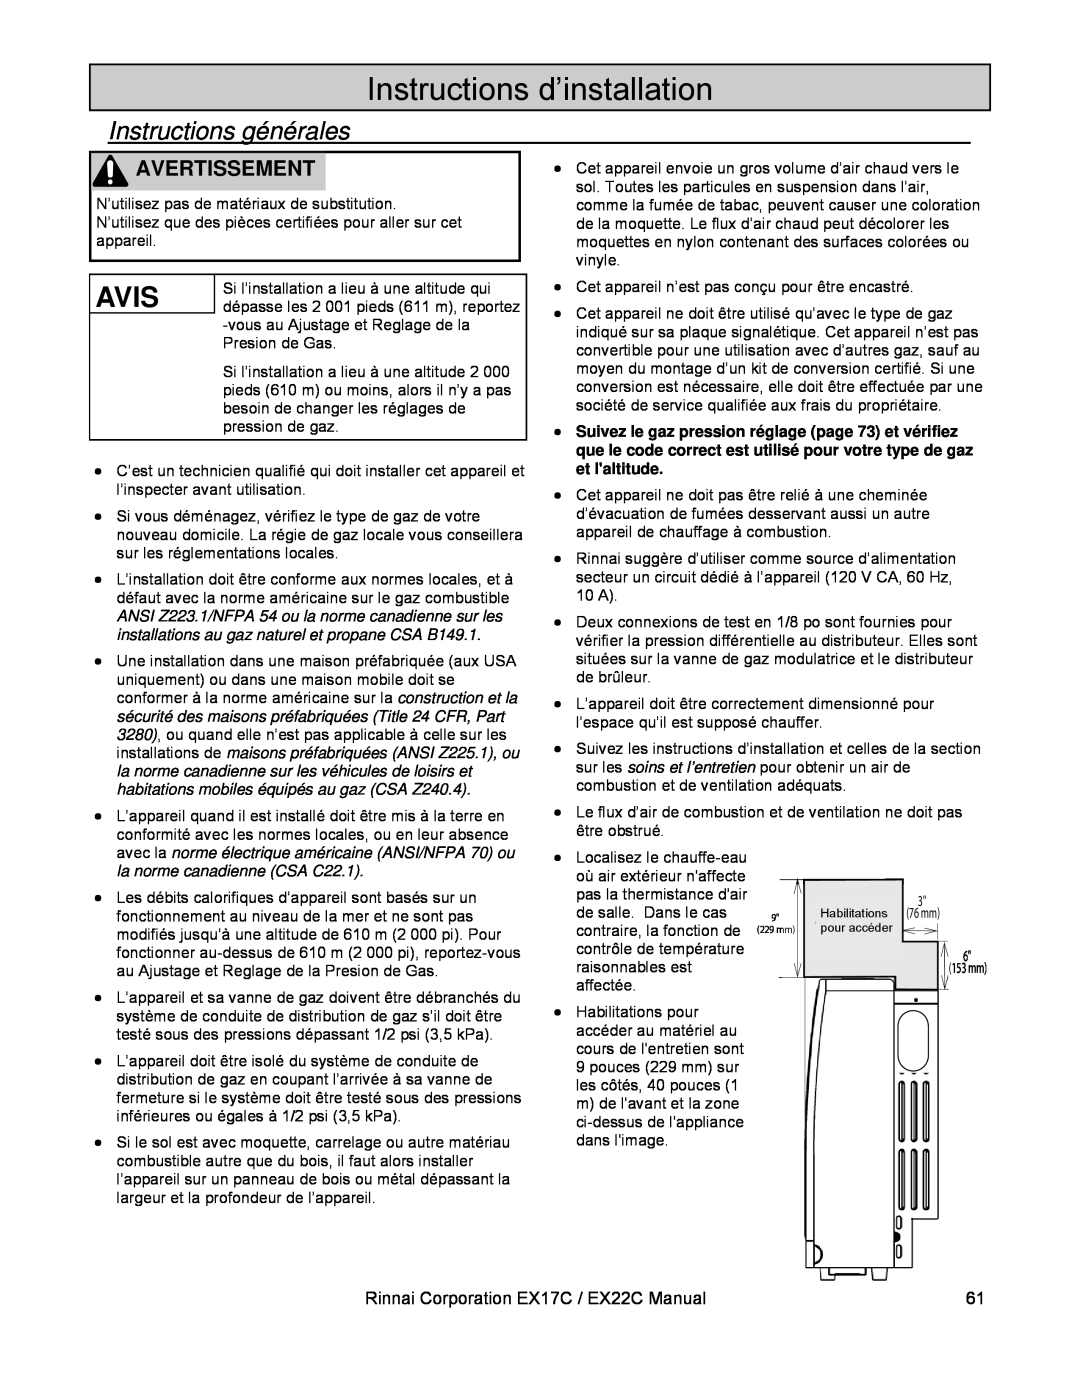 Rinnai EX17C (RHFE-434FTA), EX22C (RHFE-559FTA) installation manual Instructions d’installation, Instructions générales 